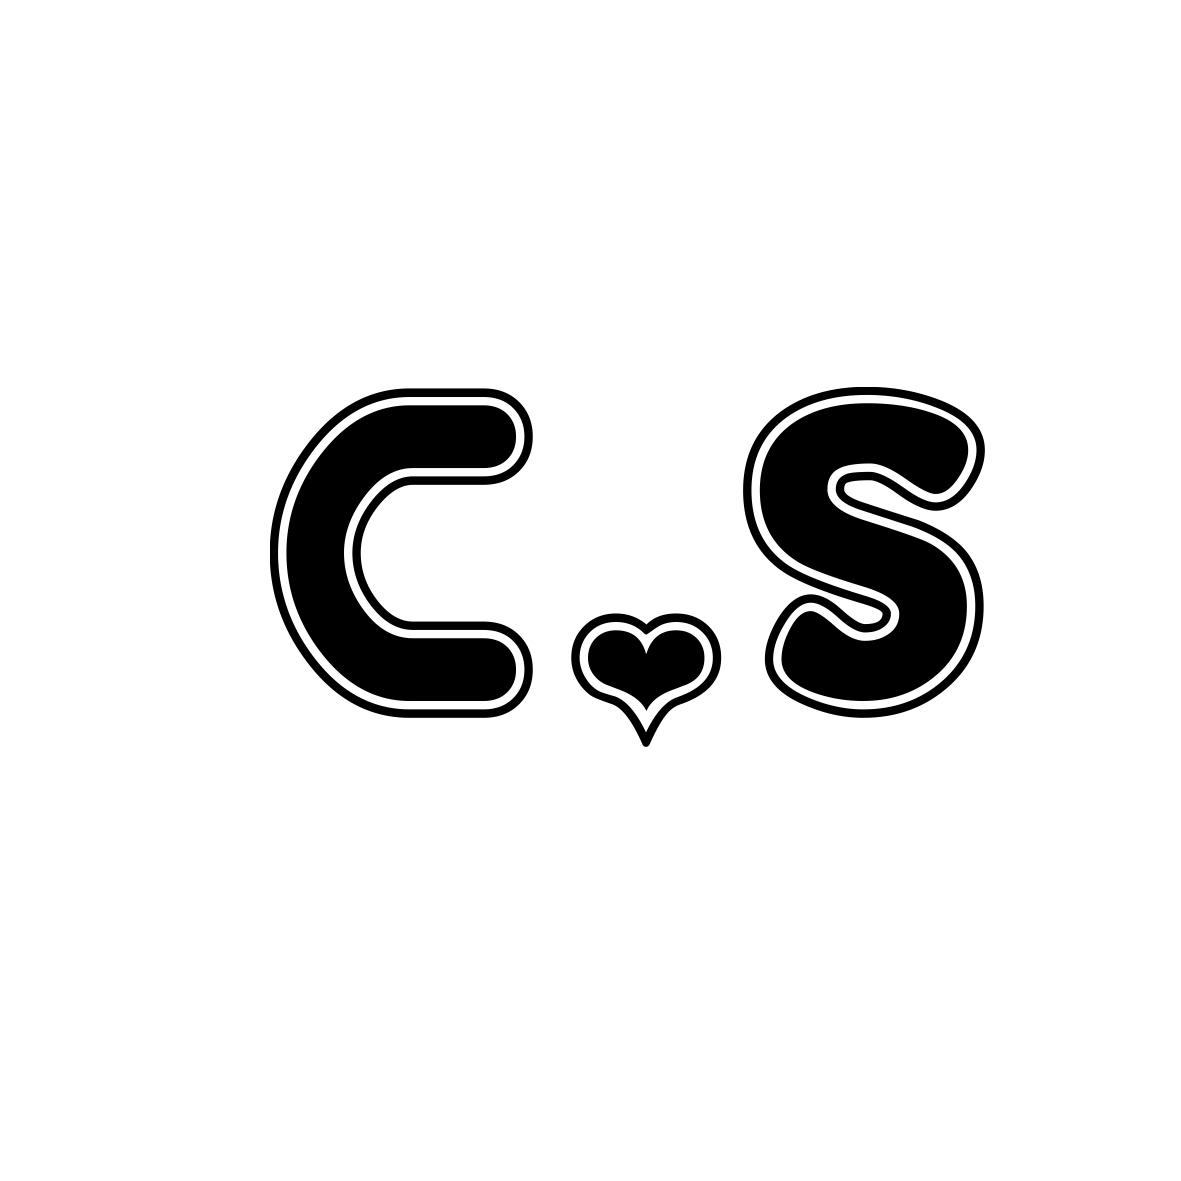 C.S商标转让